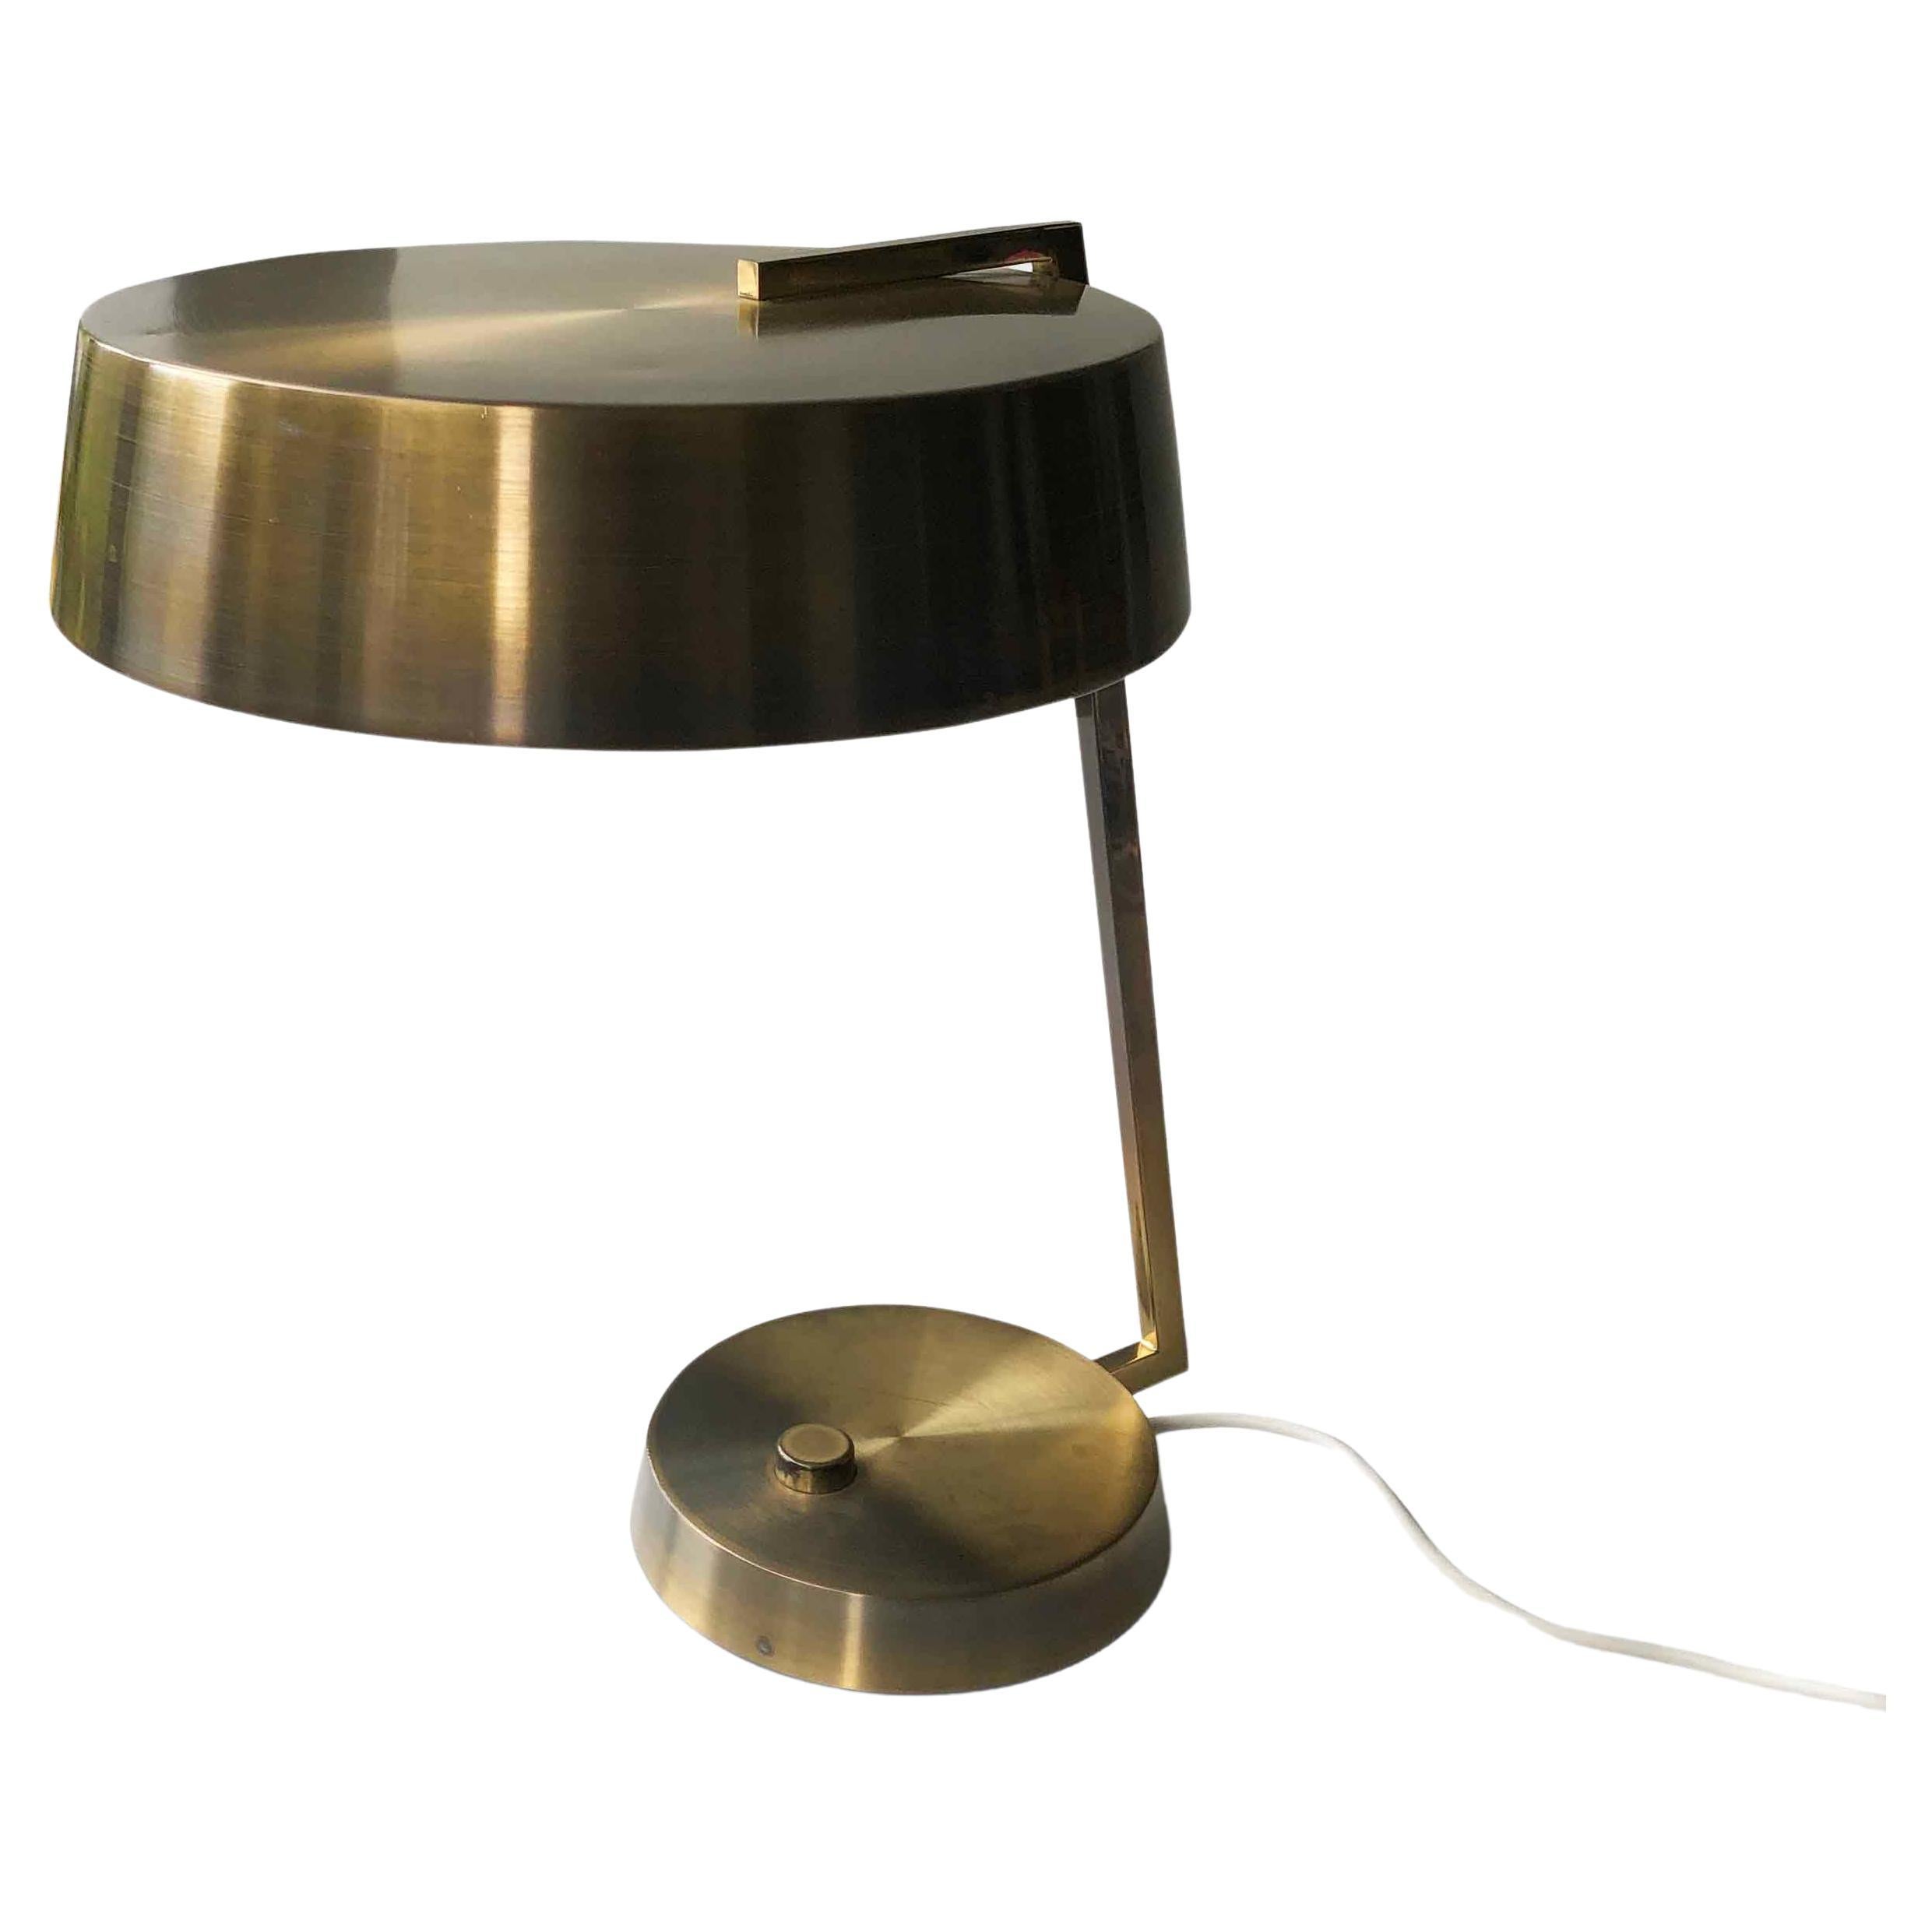 Italian Desk Lamp or Table Lamp by Stilux, Milano